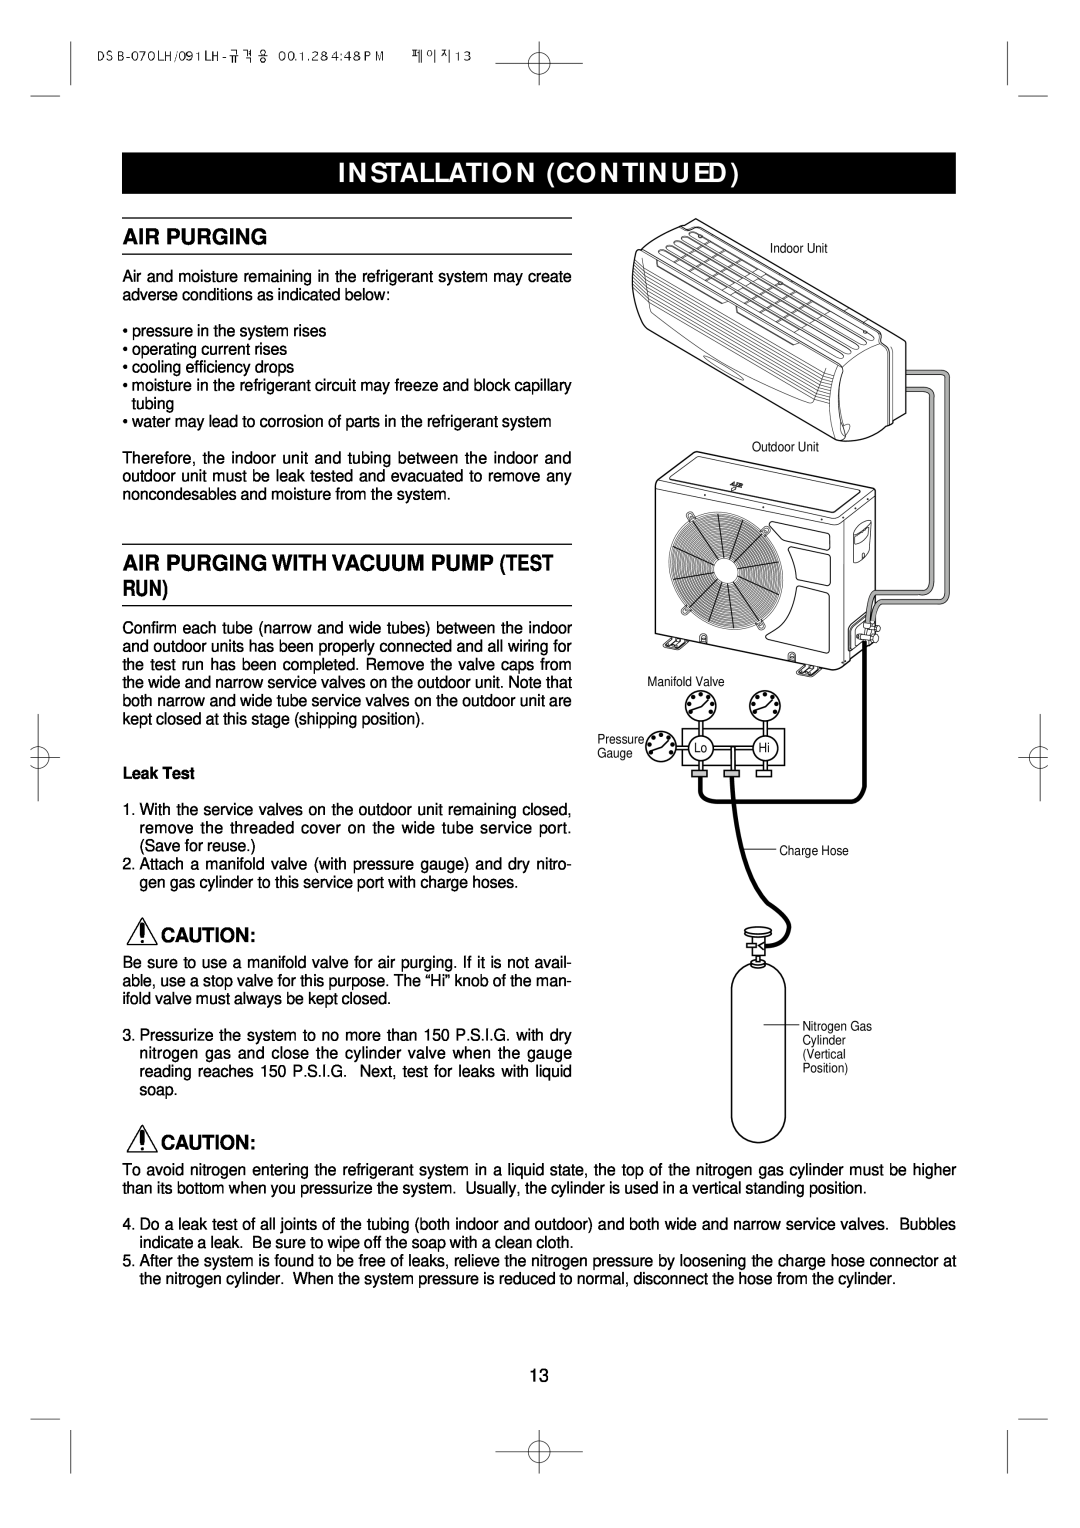 Daewoo DSB-071LH owner manual Air Purging With Vacuum Pump Test Run, Leak Test, Installation Continued 